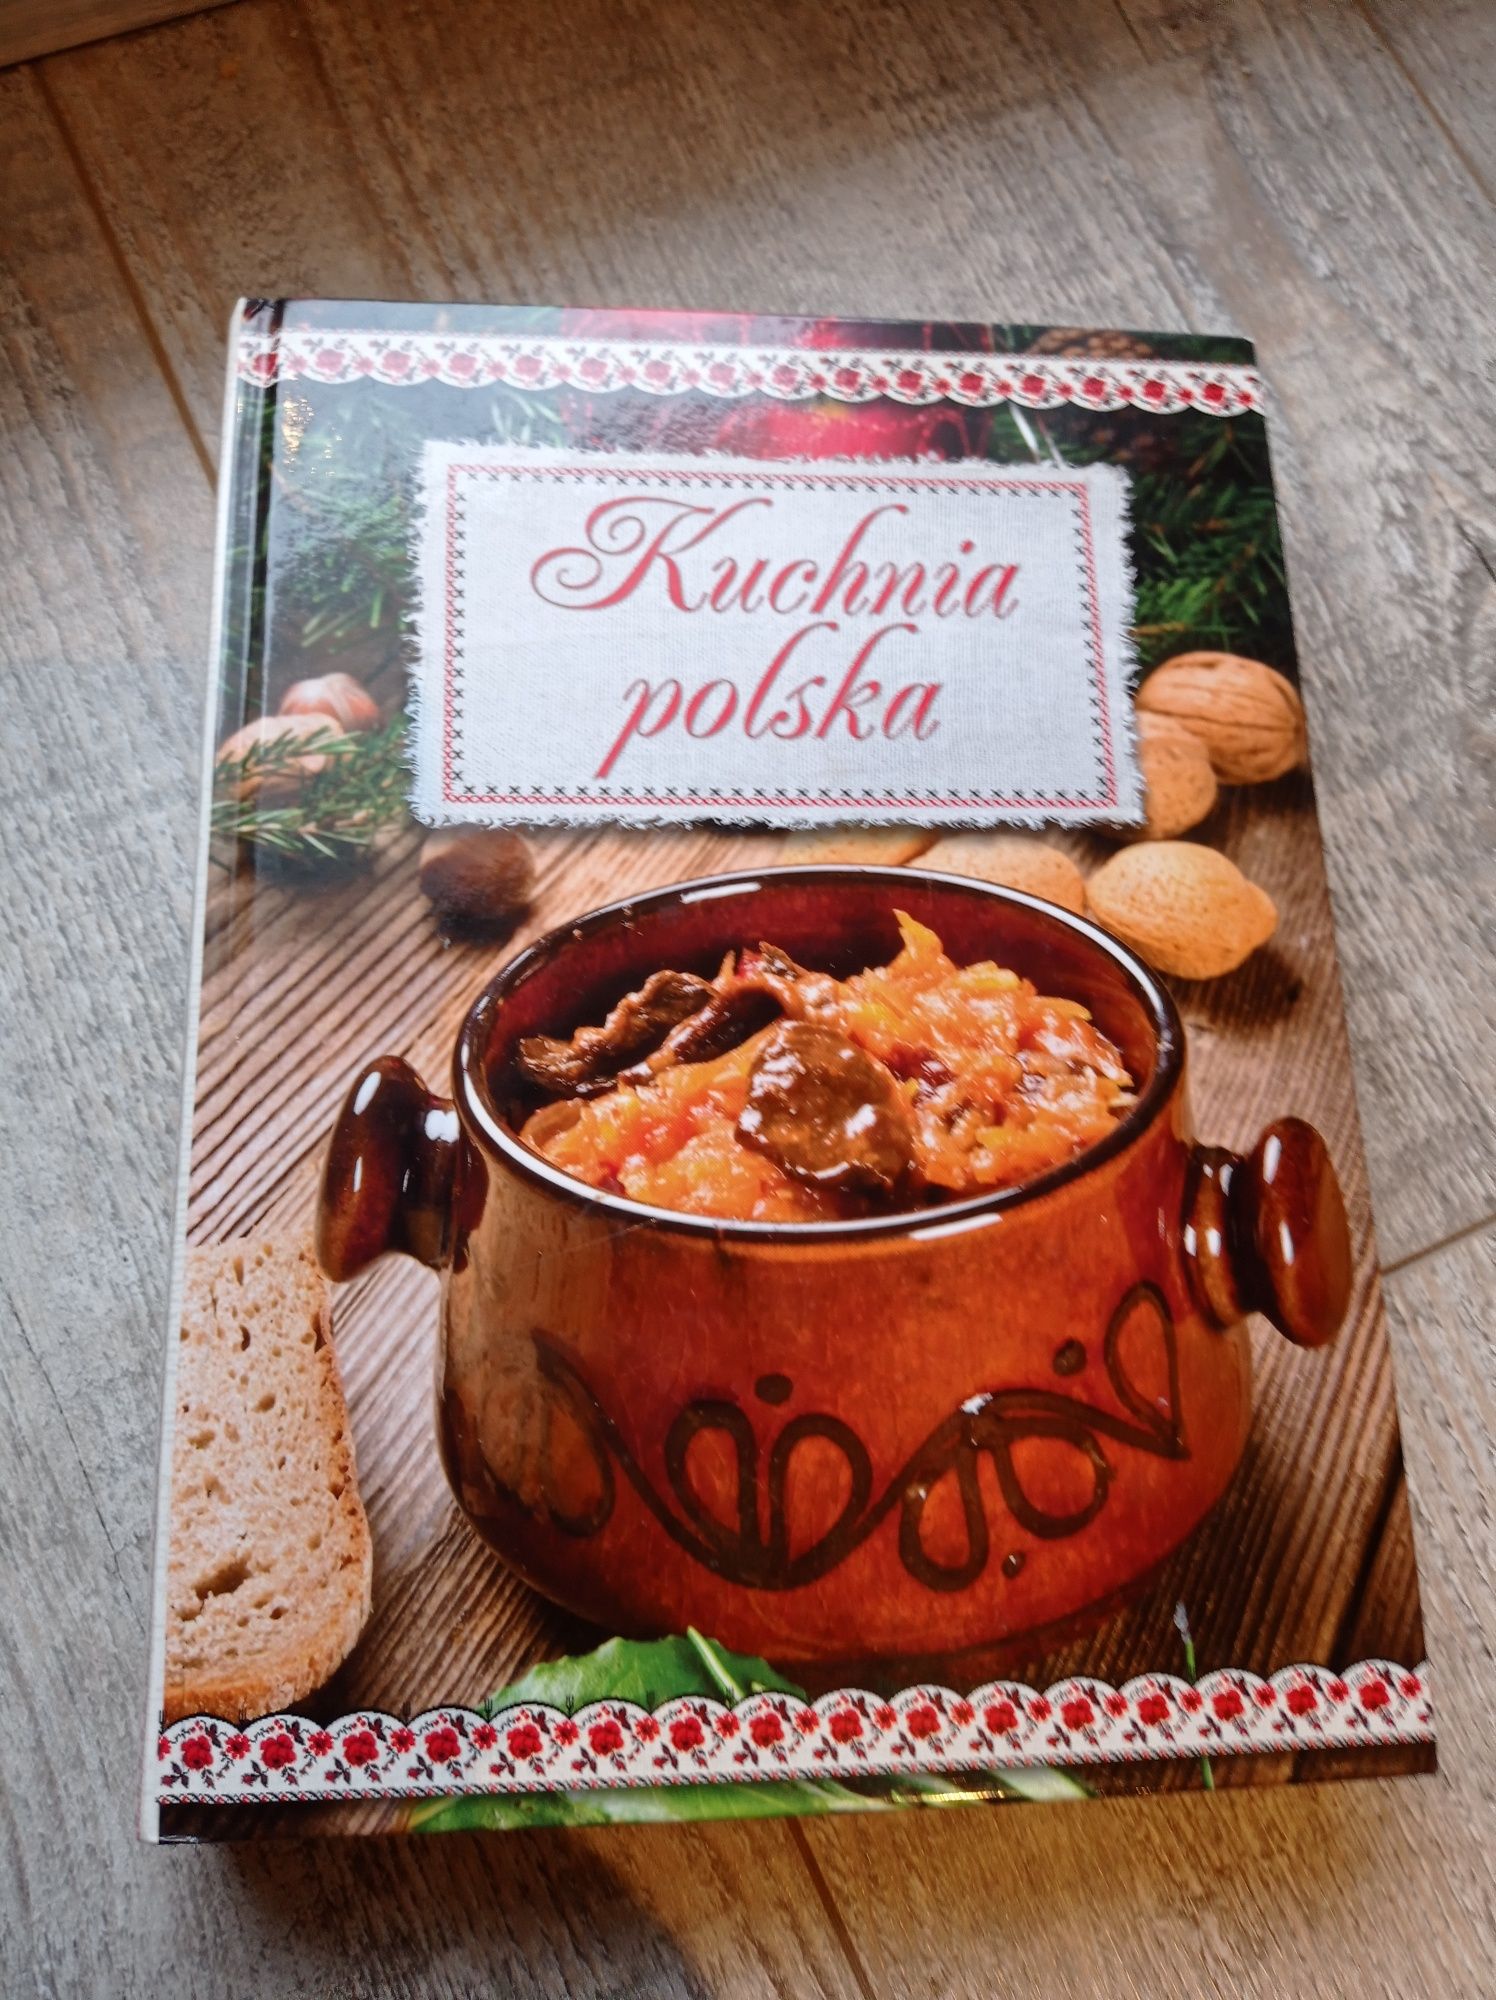 Kuchnia Polska - książka kucharska, przepisy, porady + GRATIS